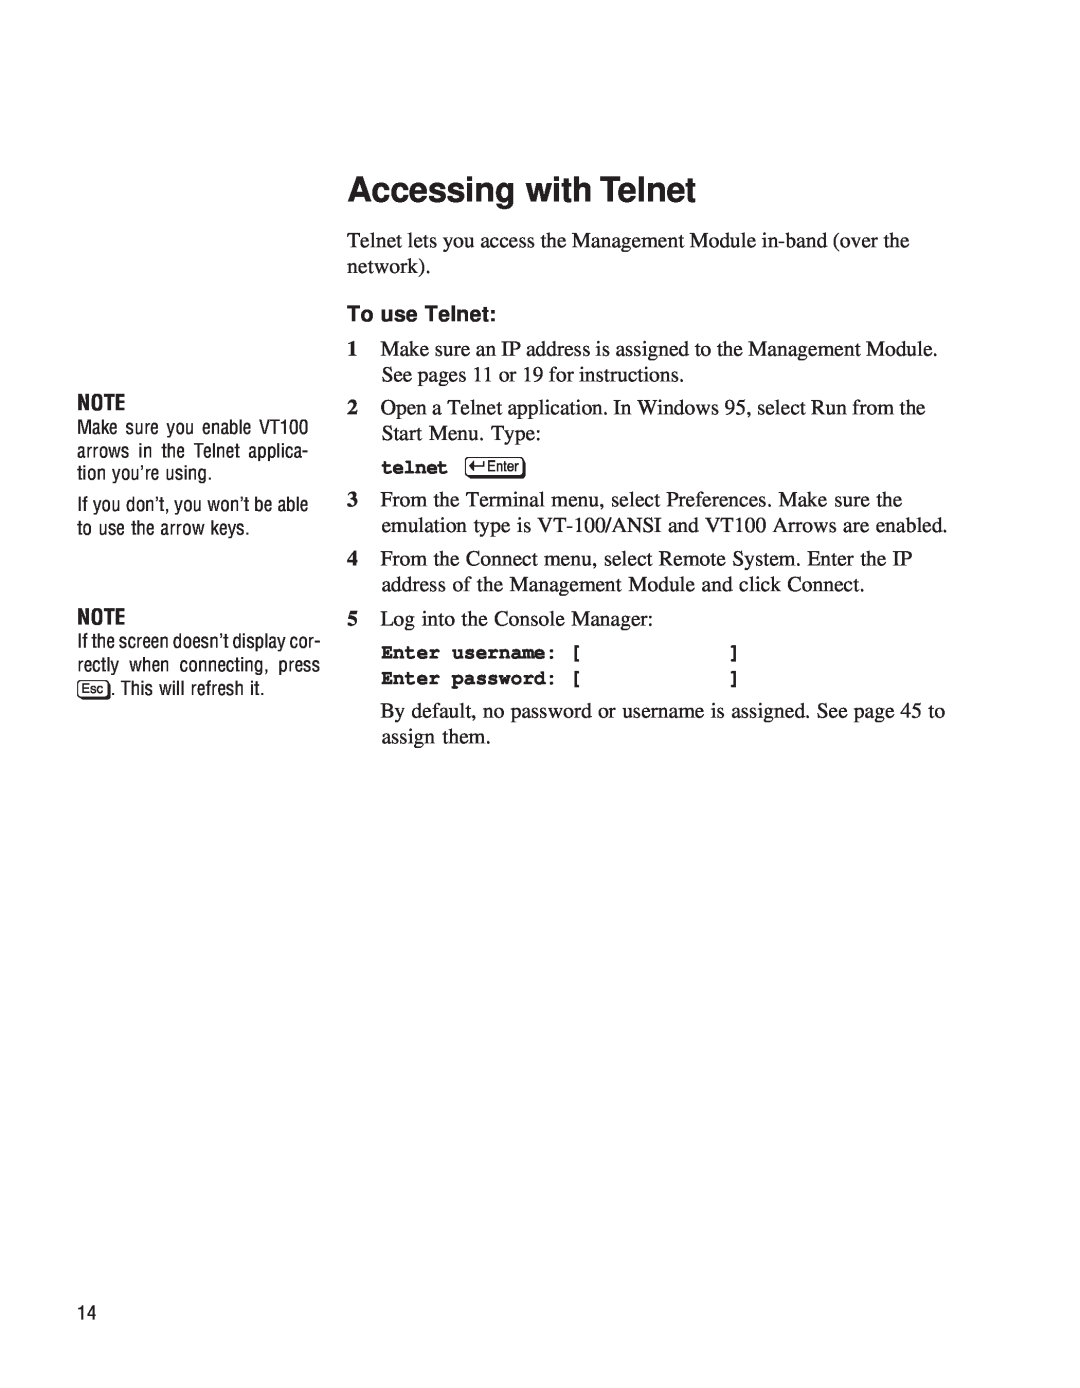 Intel EE110MM manual Accessing with Telnet, telnet E, To use Telnet, Enter 